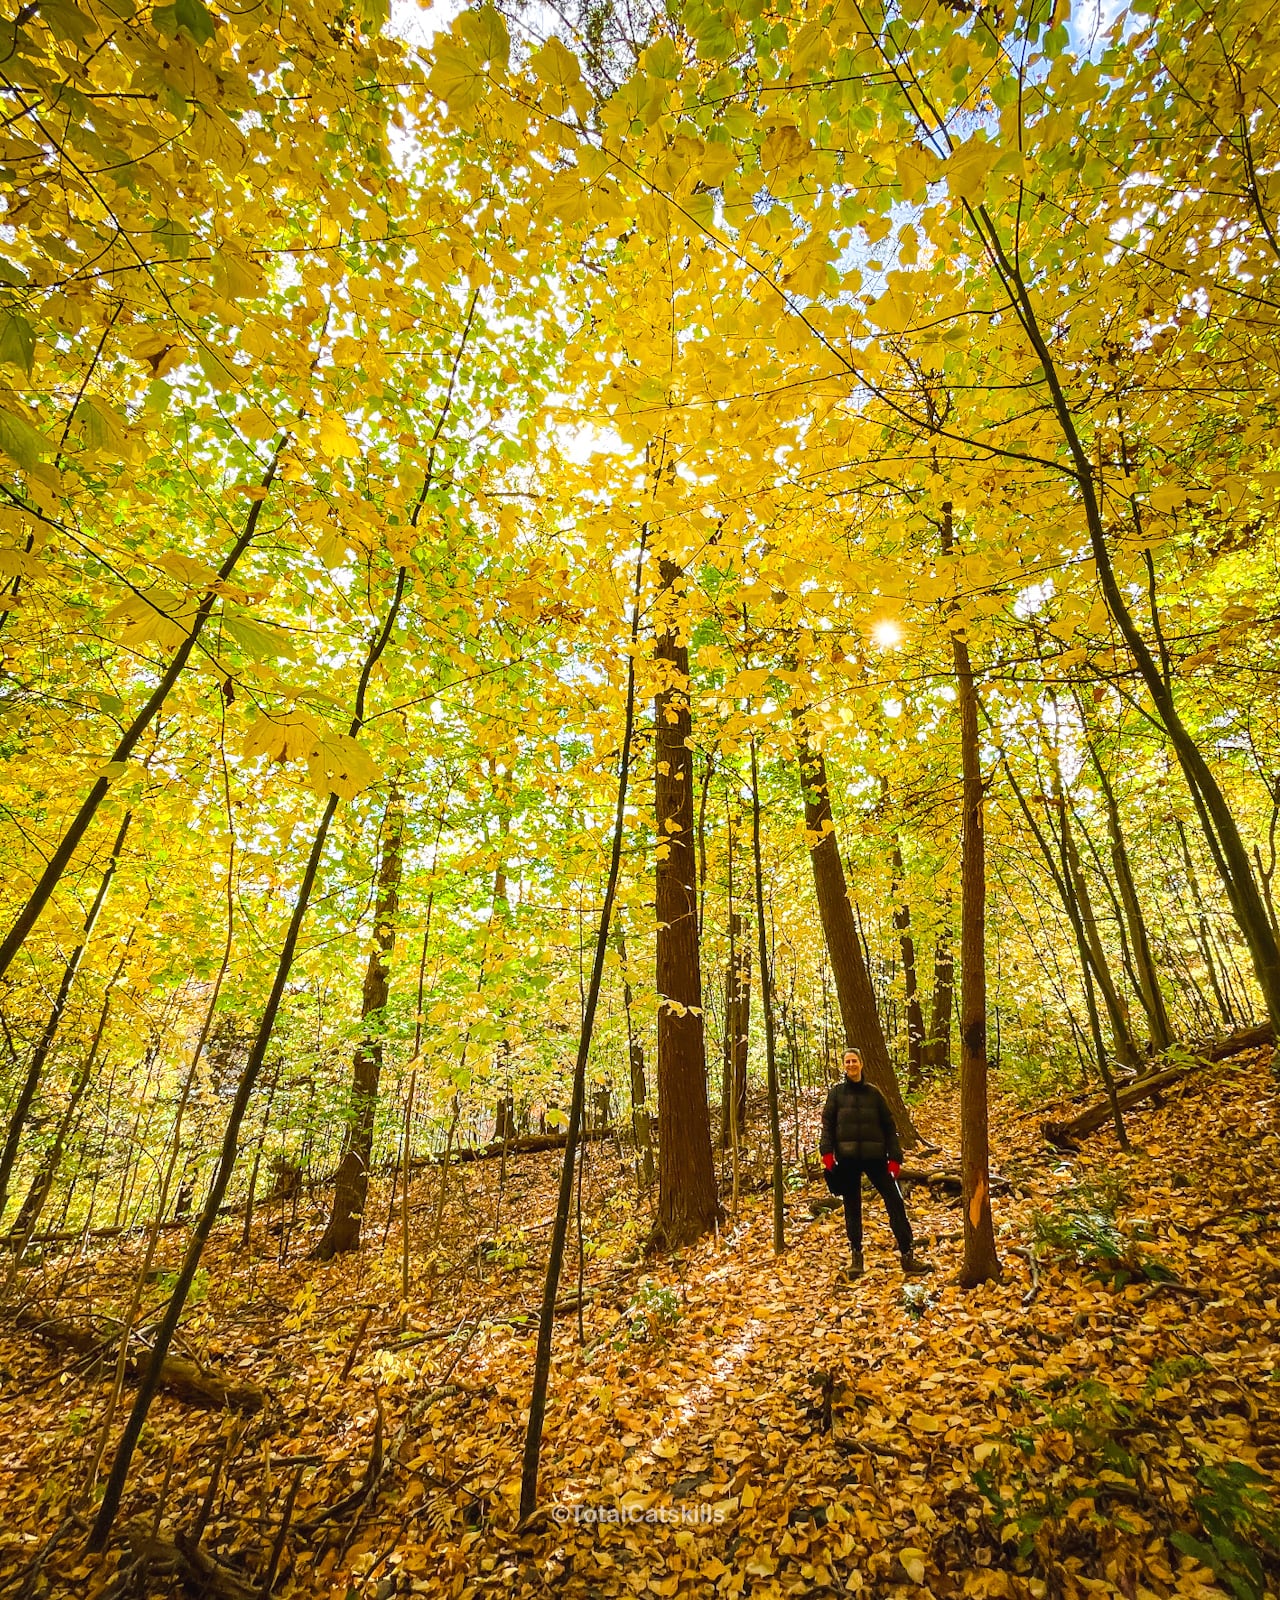 catskills fall foliage 2022 with hiker